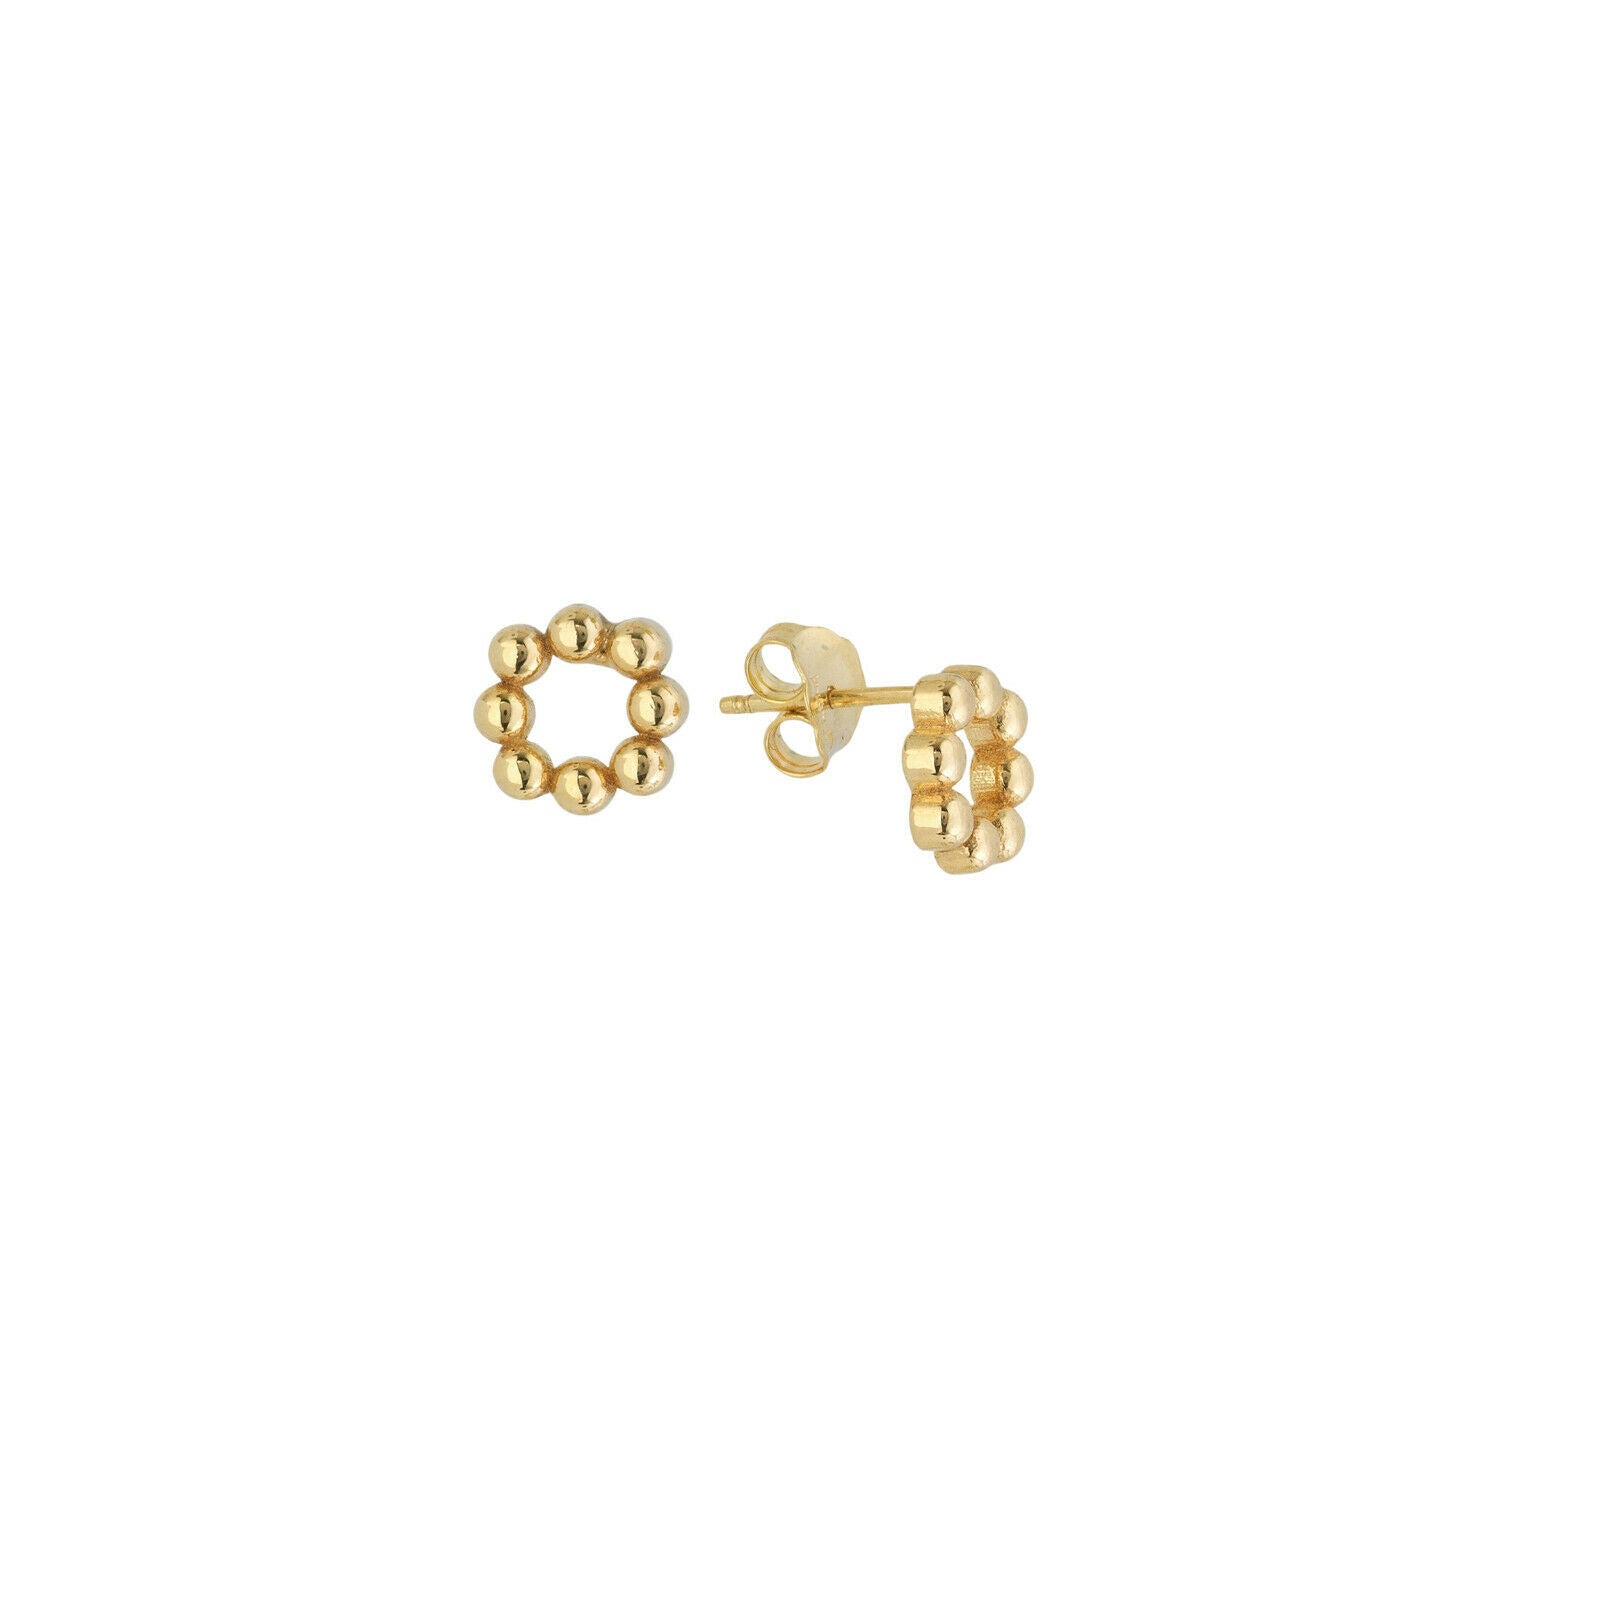 14K Solid Yellow Gold Small Circle Bead Stud Earrings - Minimalist